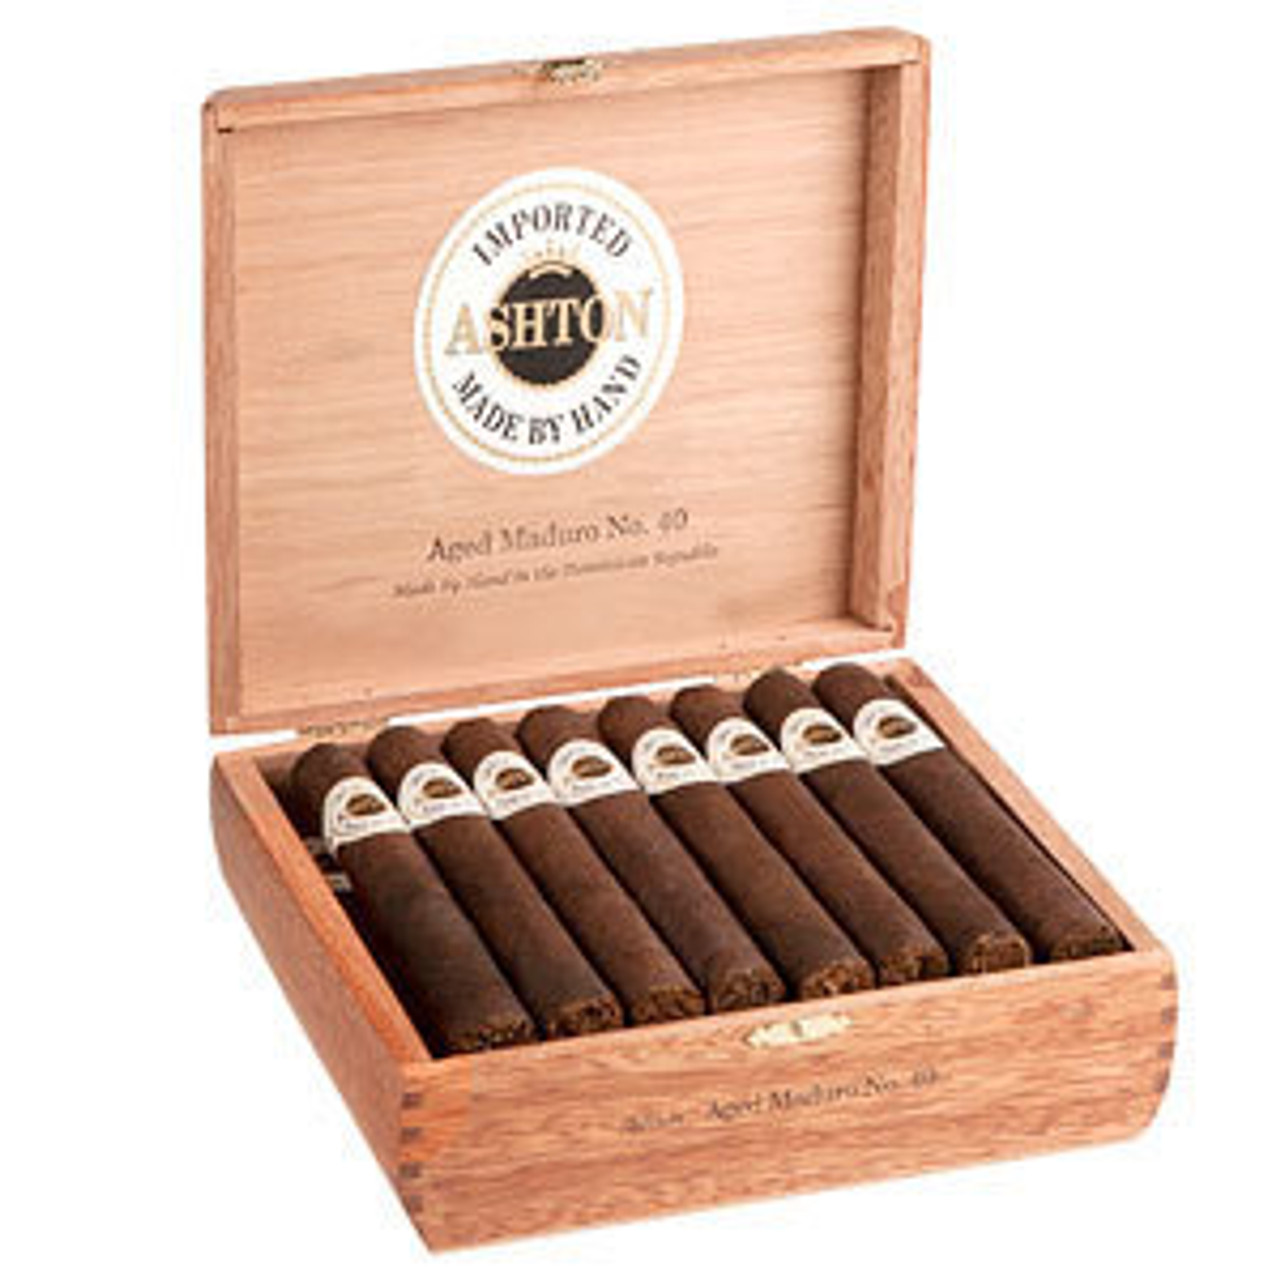 Ashton Aged Maduro No. 56 Cigars - 6 x 56 (Box of 25) Open